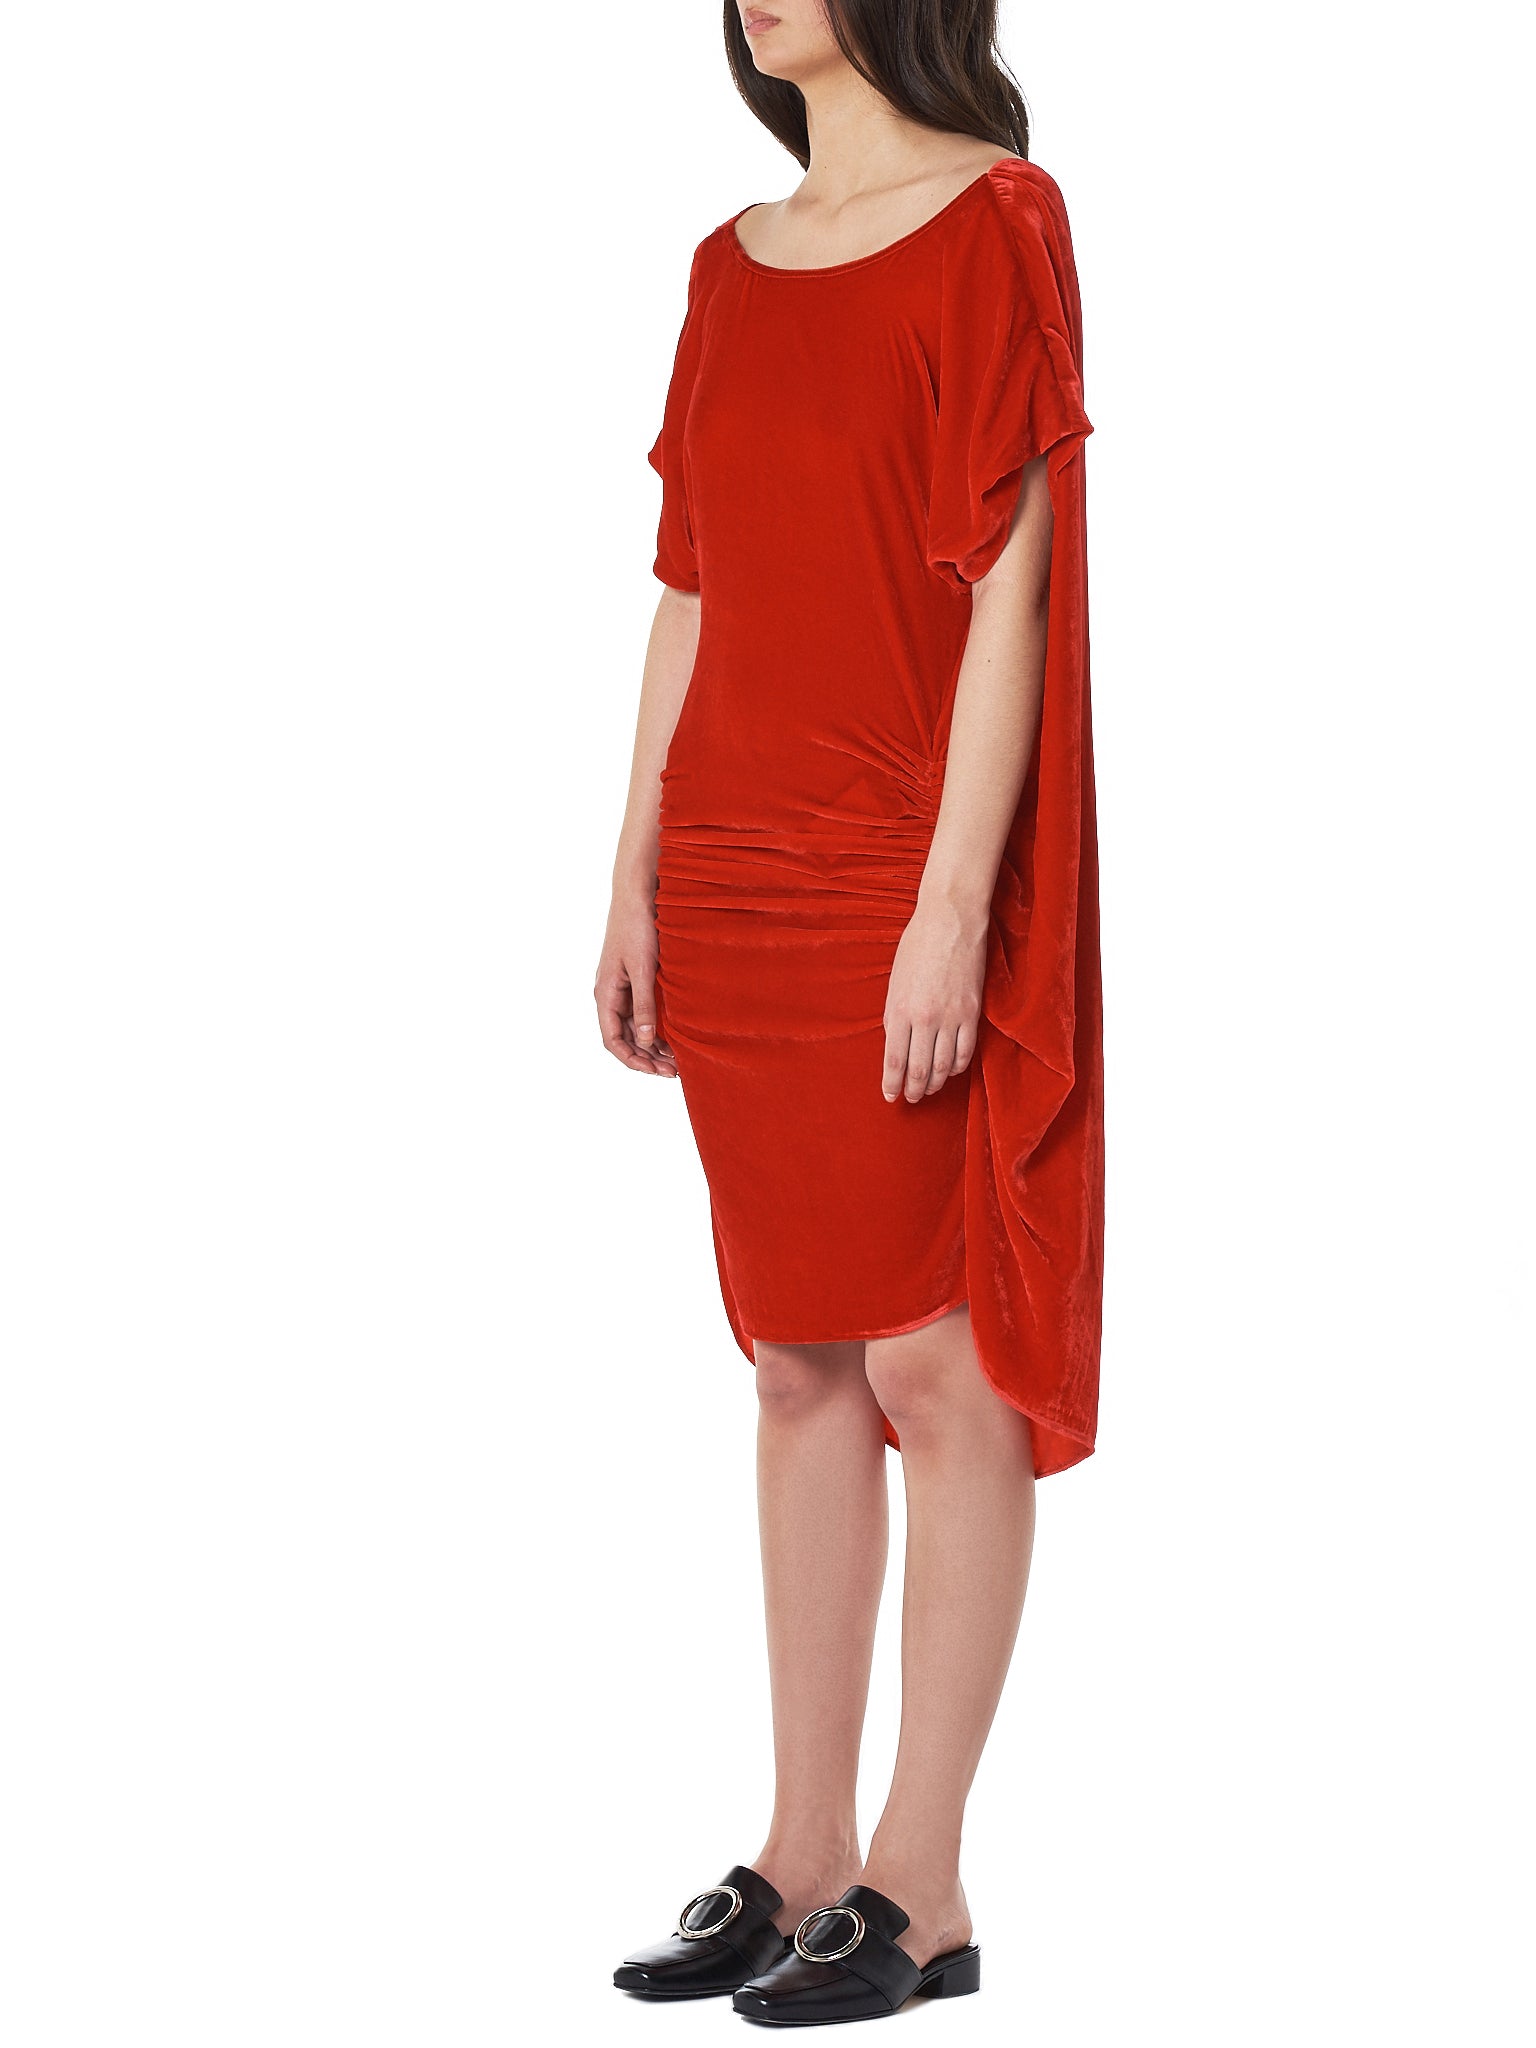 Paula Knorr Short Dress - Hlorenzo Side